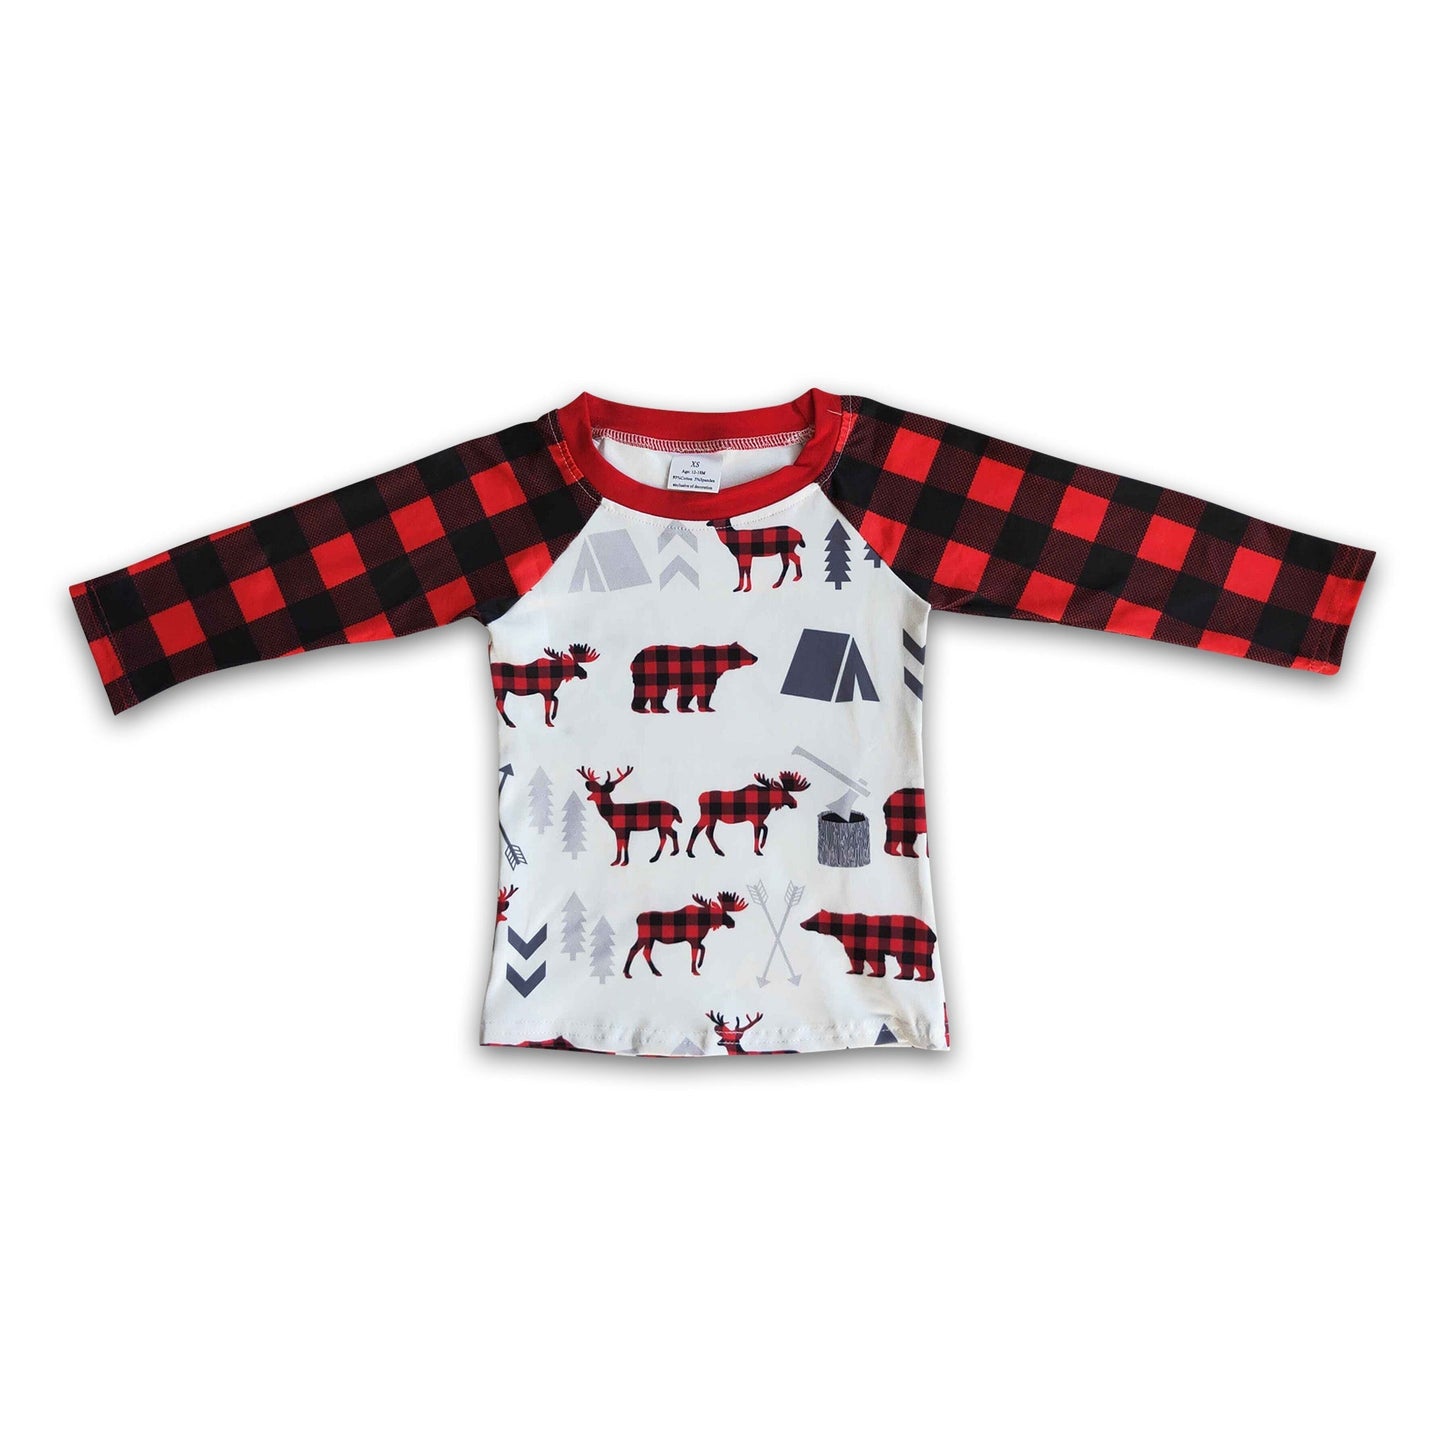 Reindeer bear print plaid long sleeve boy Christmas shirt